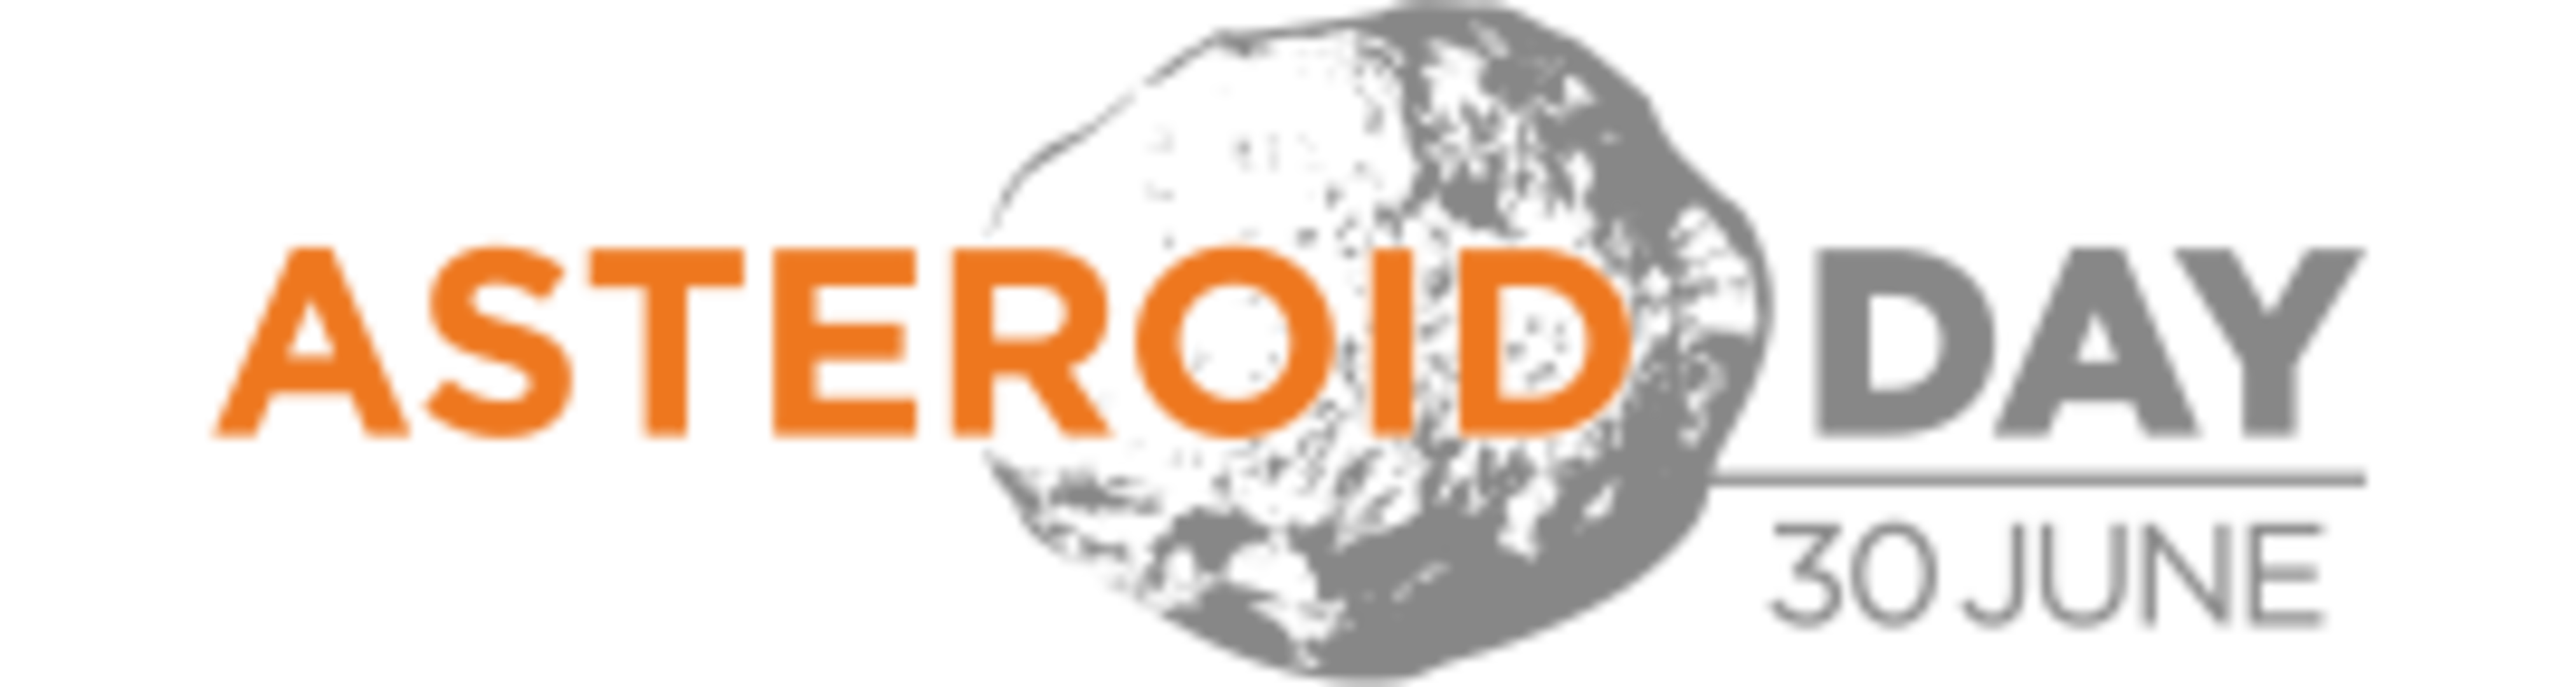 Asteroid Day logo